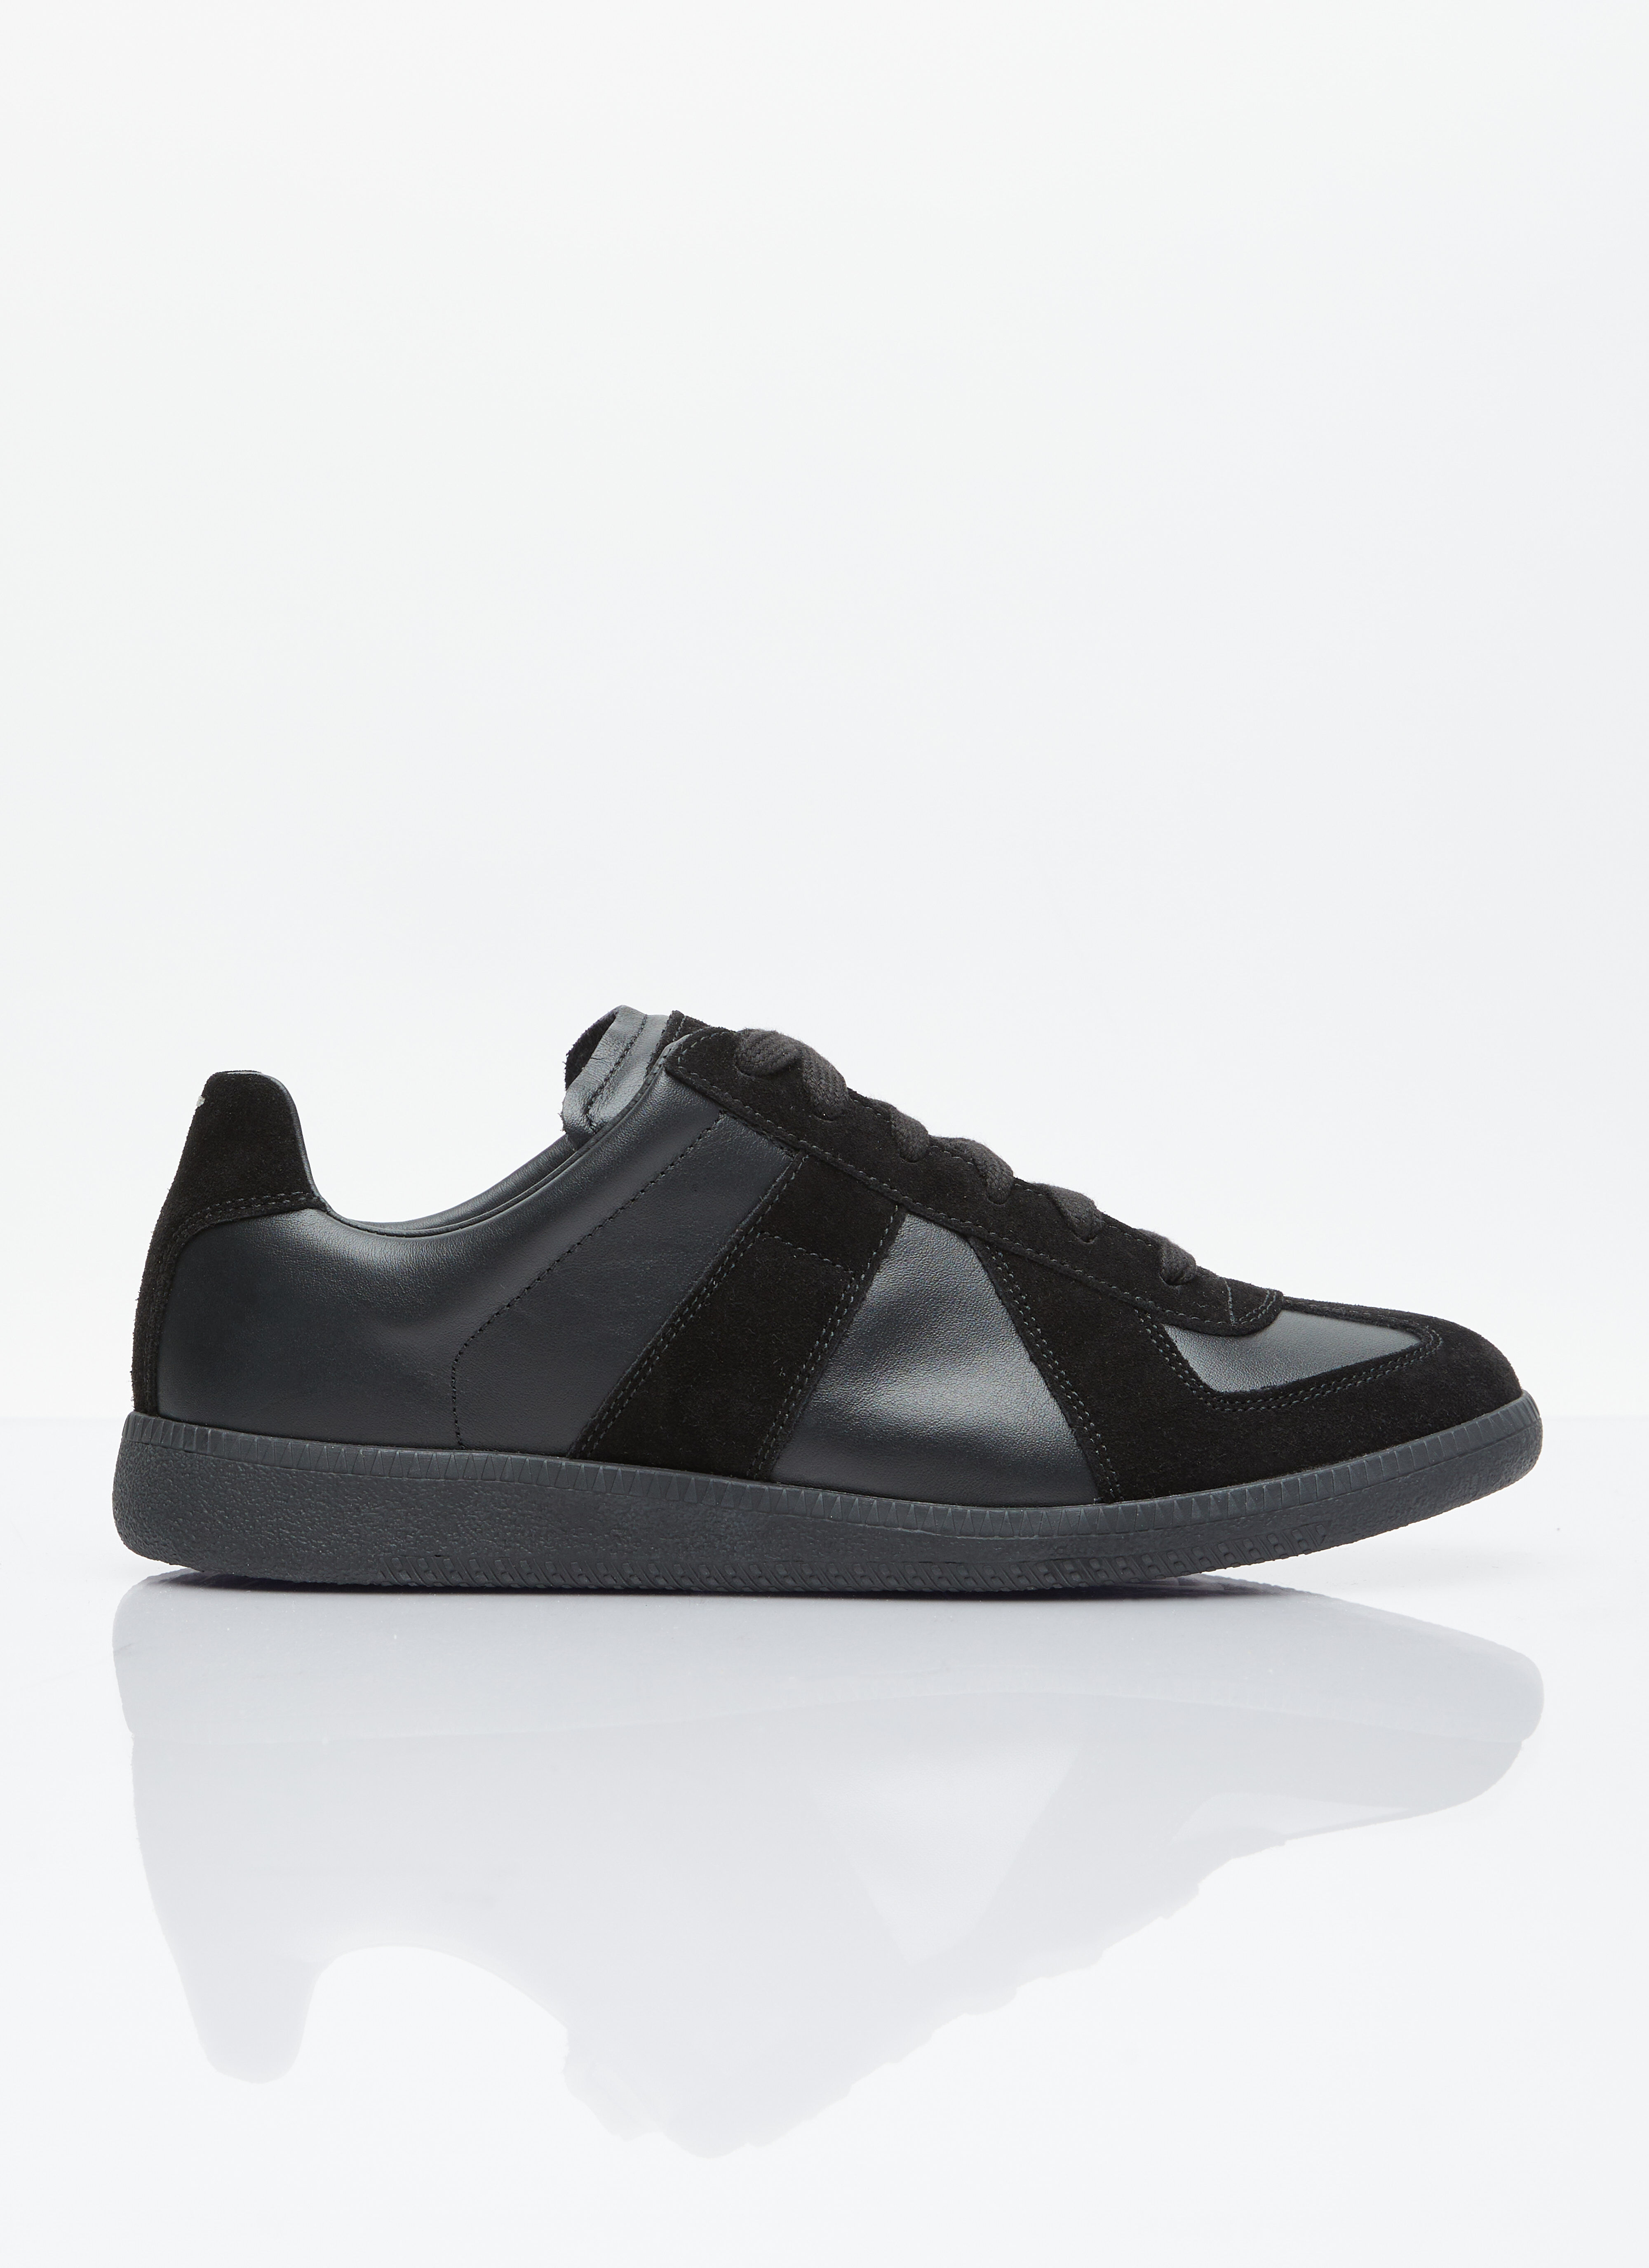 Maison Margiela Replica Sneakers Black mla0155009